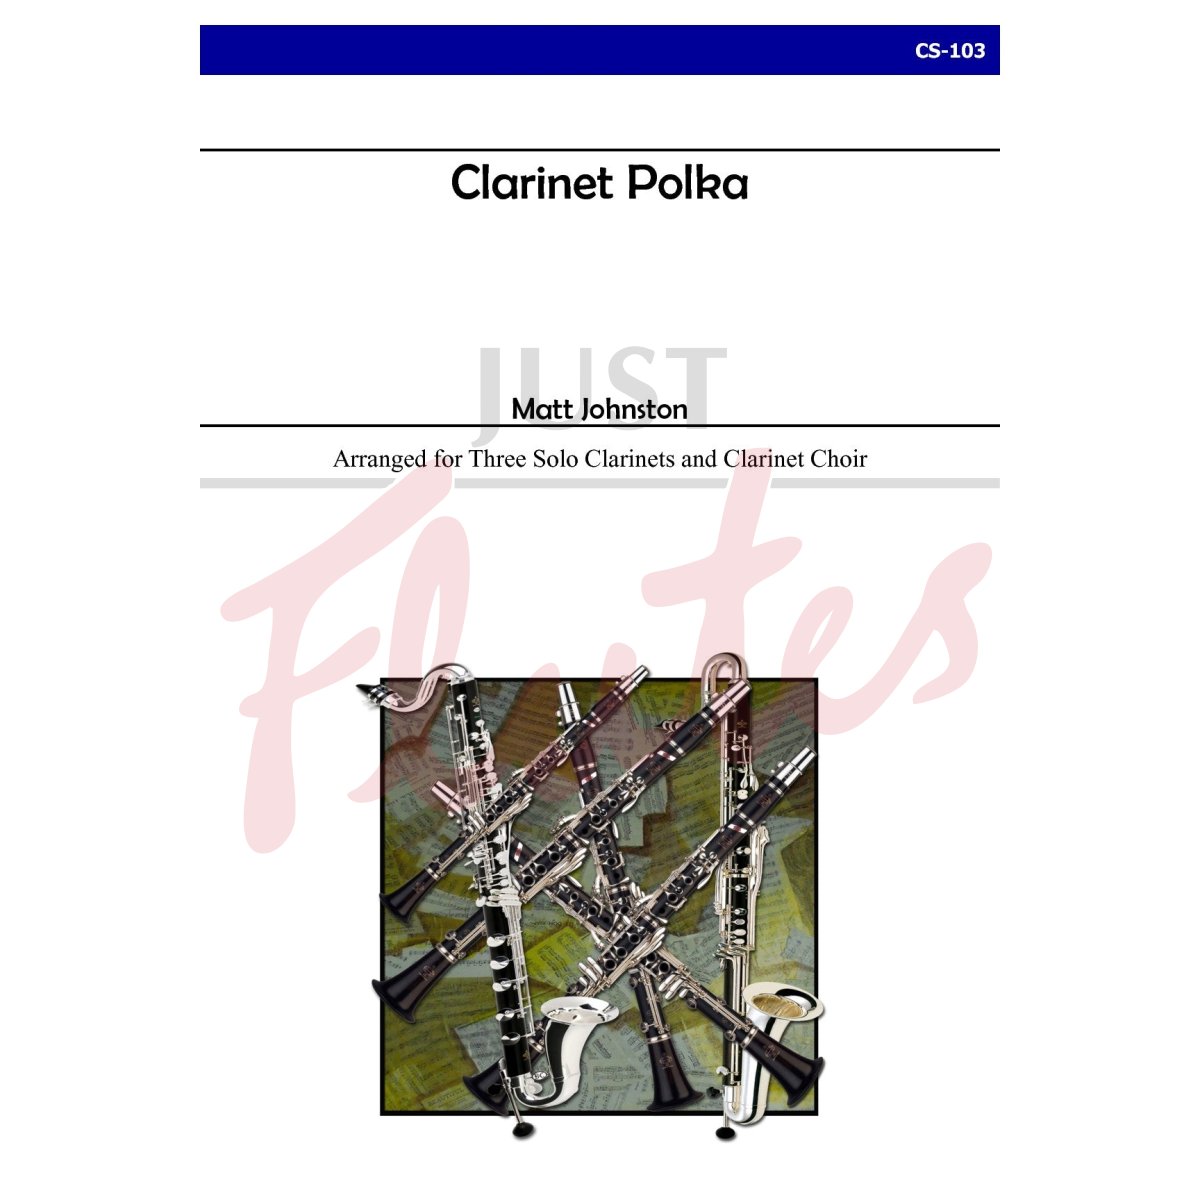 Clarinet Polka for Three Solo Clarinets and Clarinet Choir